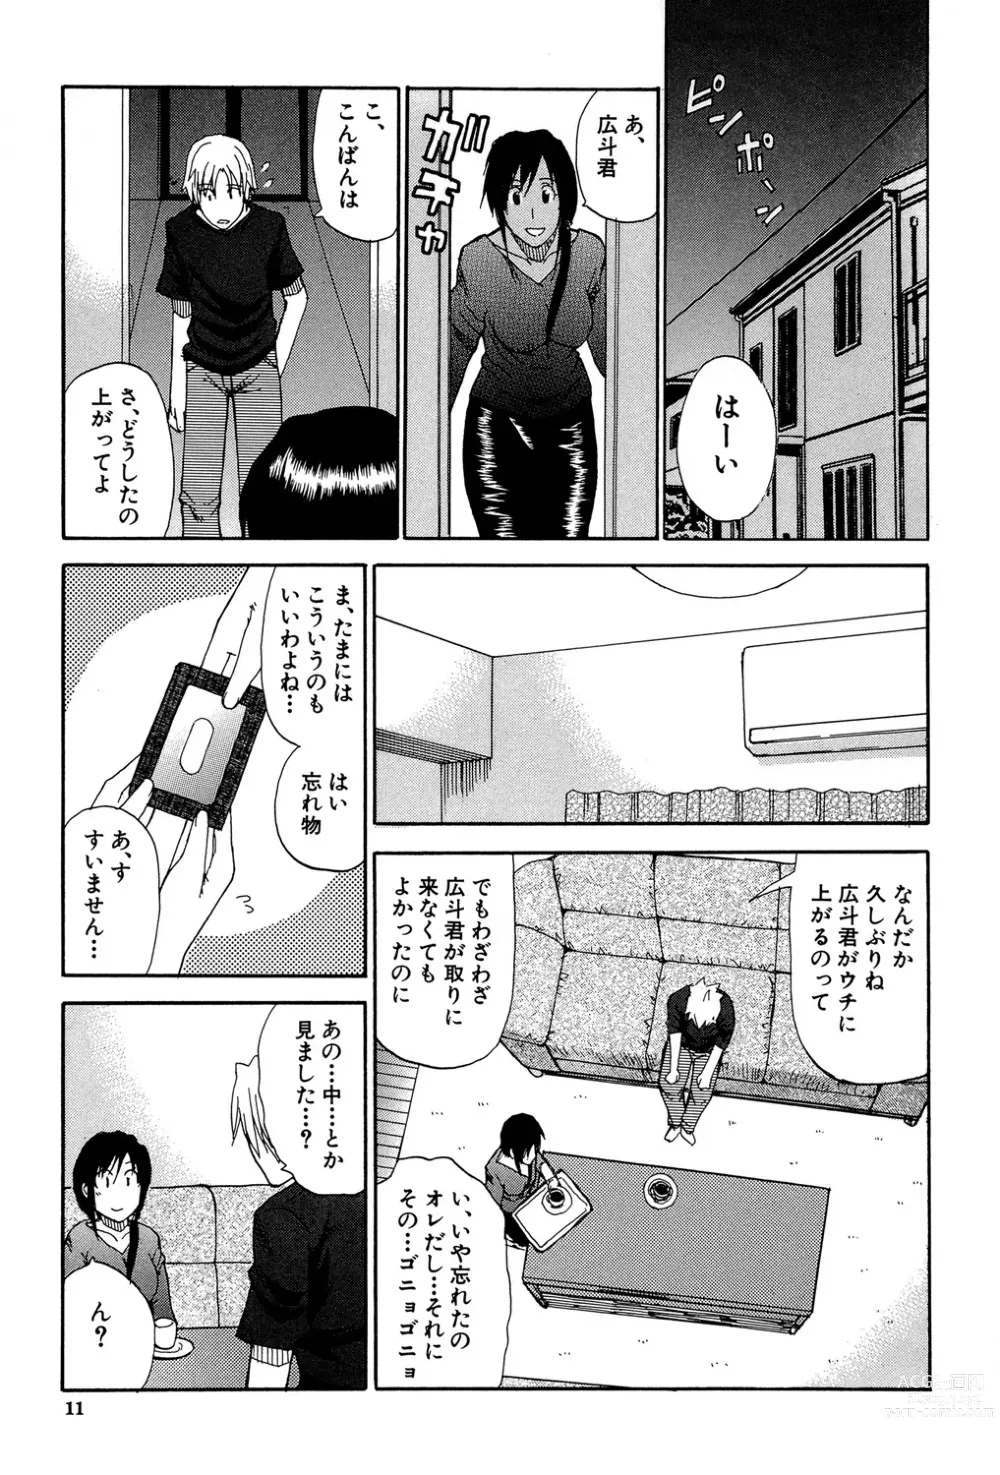 Page 10 of manga Venus Rhapsody